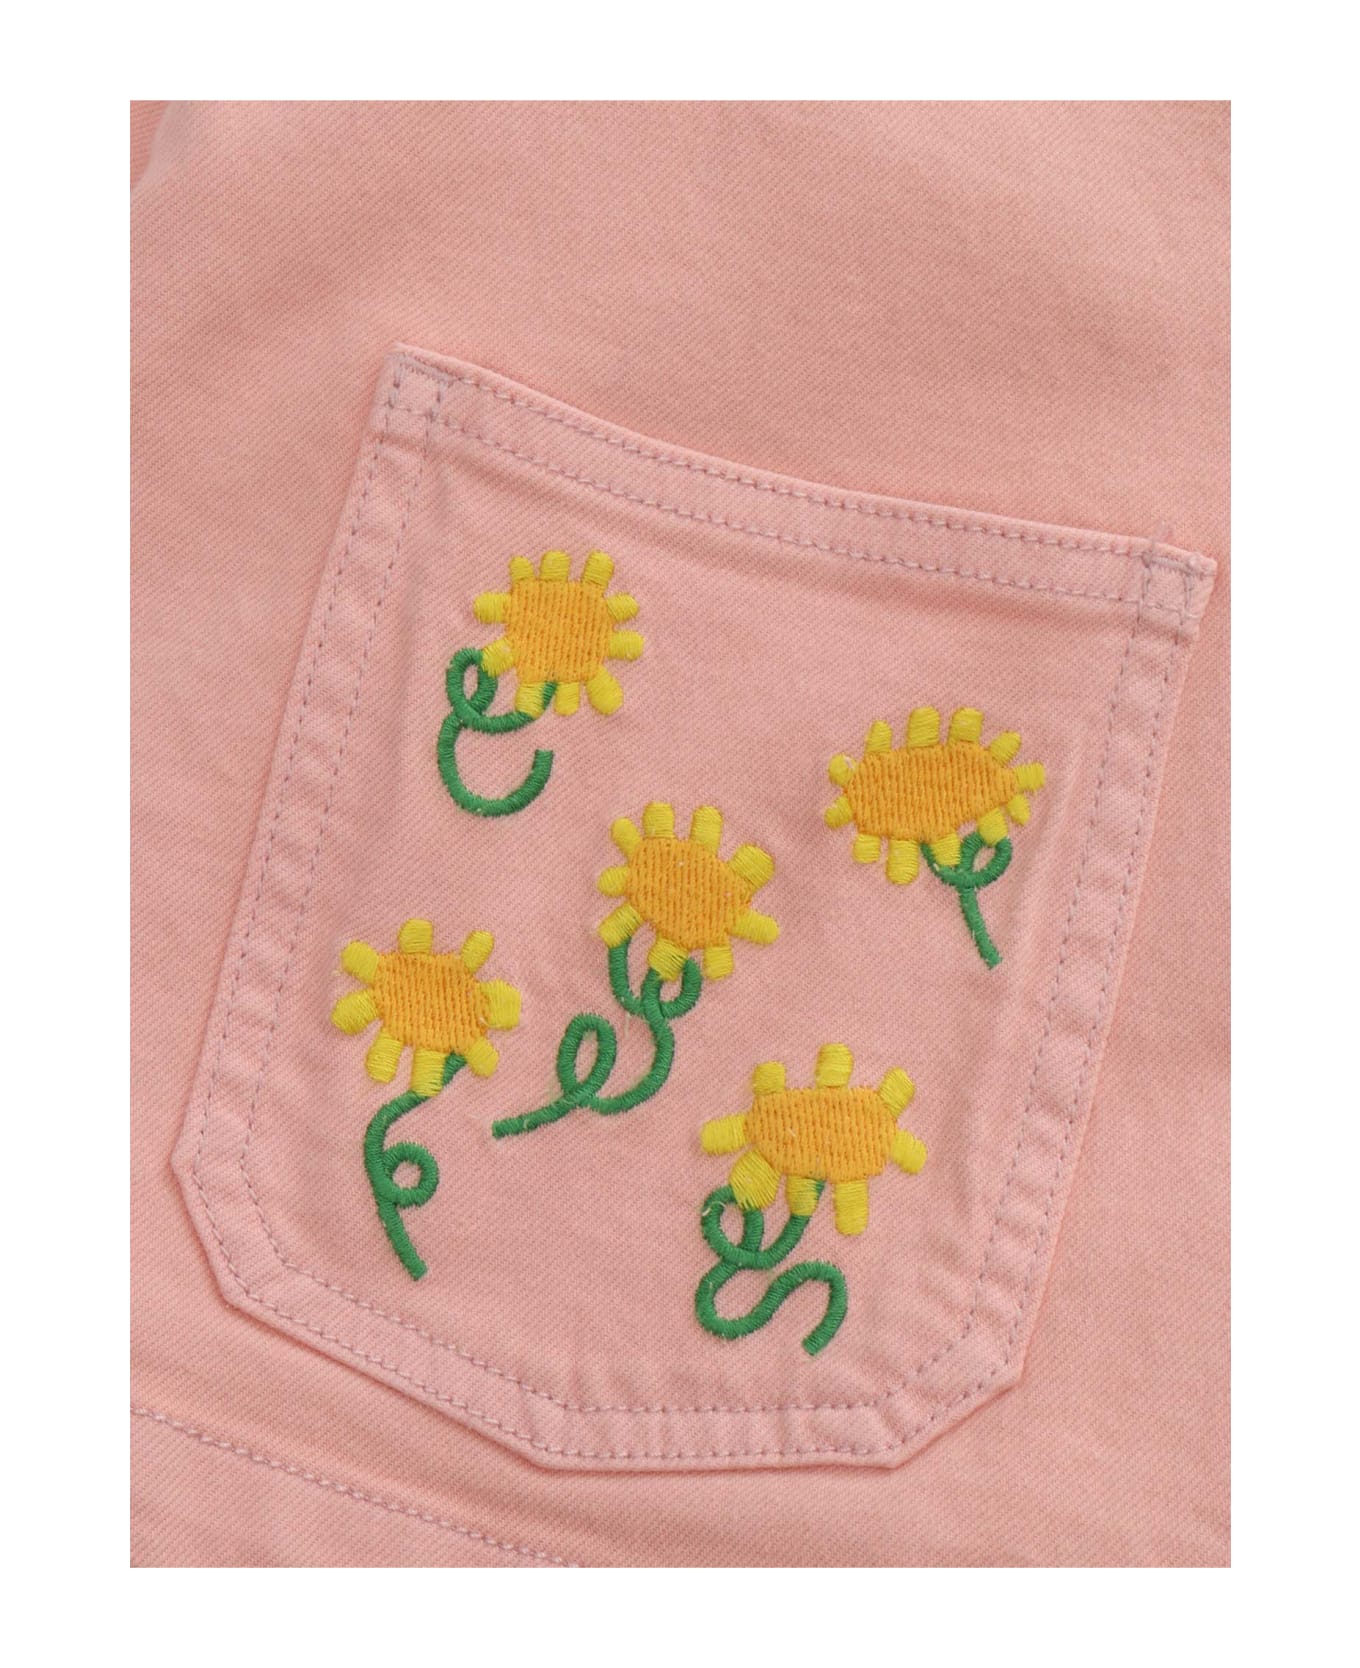 Stella McCartney Kids Pink Denim Jacket With Flowers - PINK